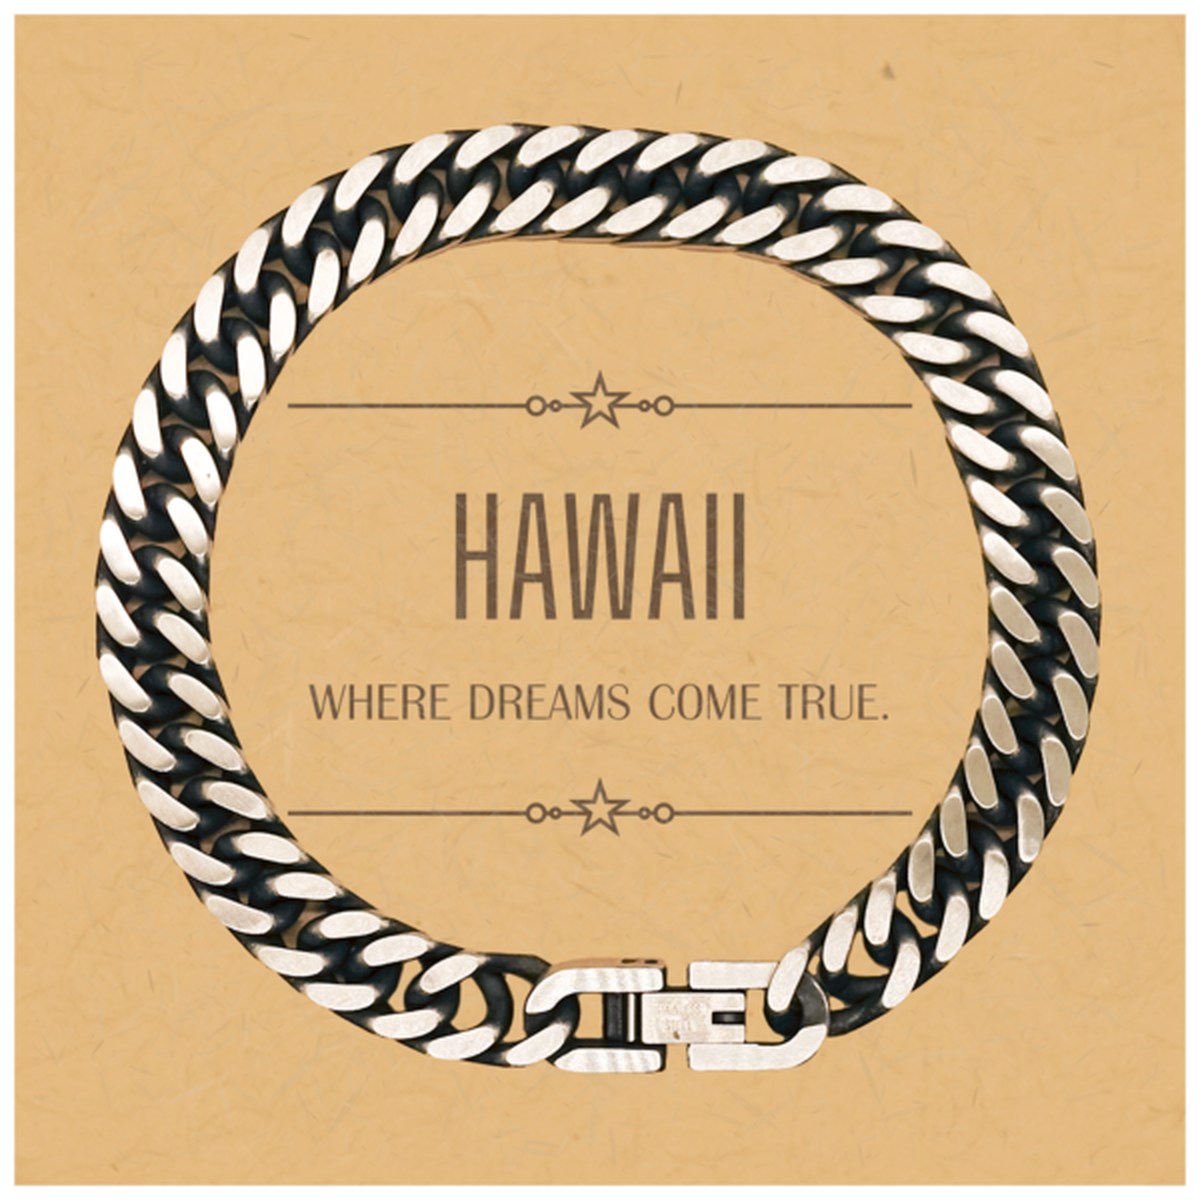 Love Hawaii State Cuban Link Chain Bracelet, Hawaii Where dreams come true, Birthday Christmas Inspirational Gifts For Hawaii Men, Women, Friends